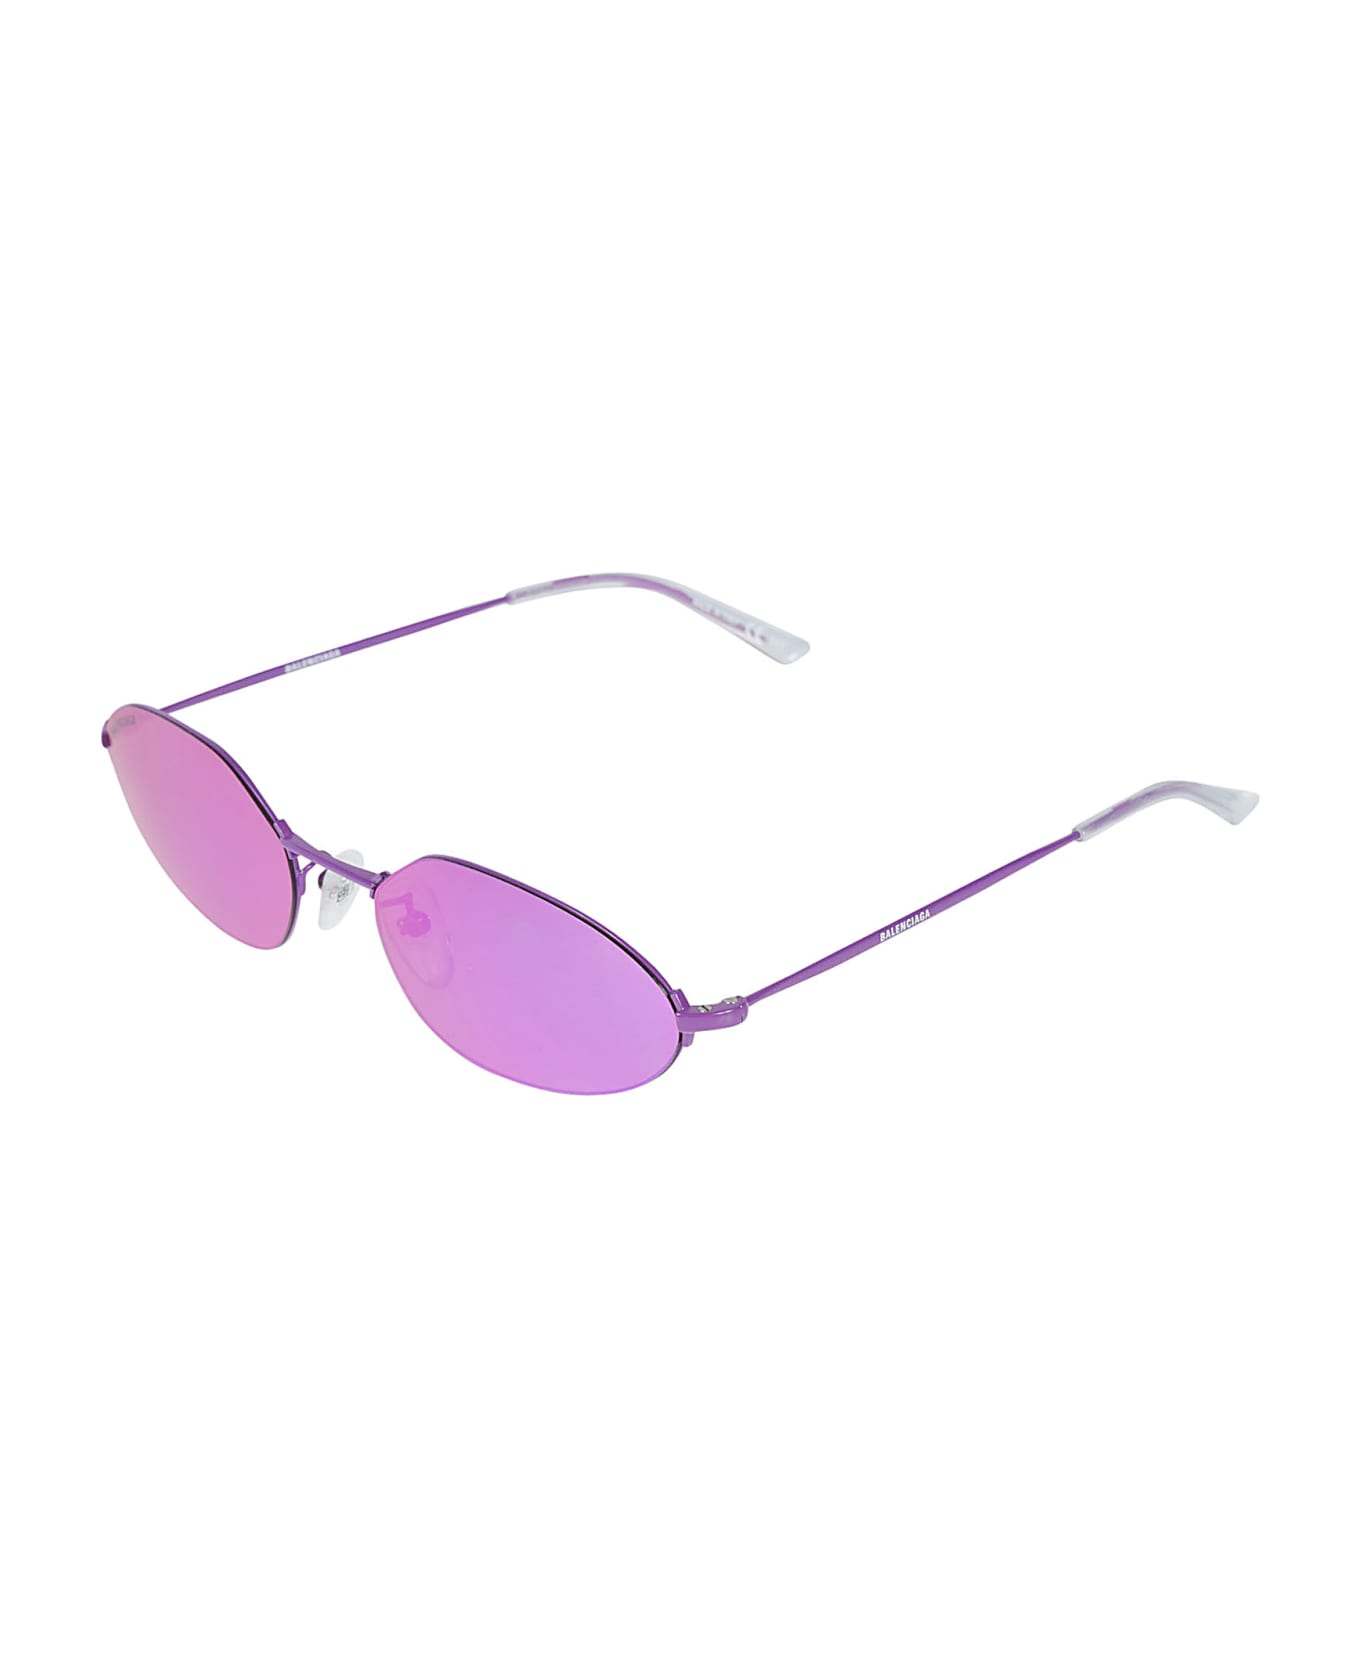 Balenciaga Eyewear Logo Frame Sunglasses - Violet サングラス